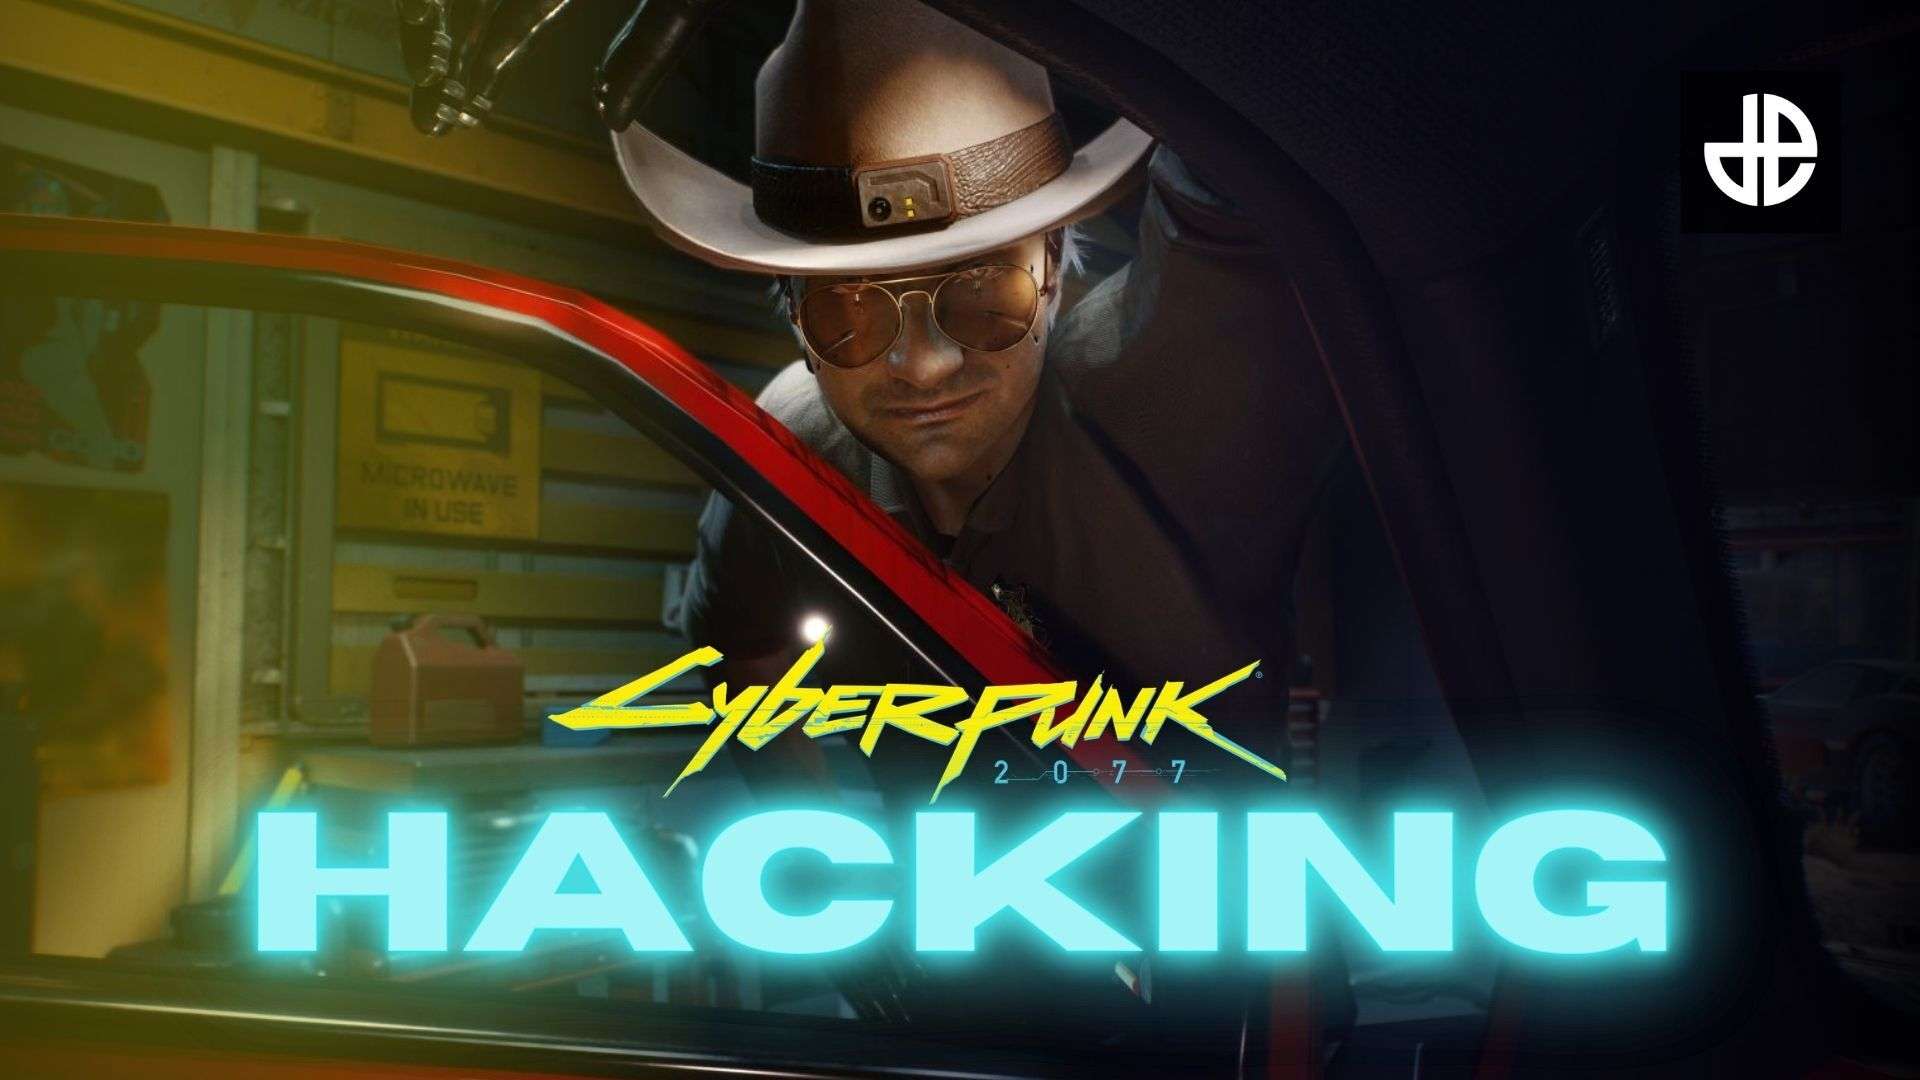 Cyberpunk 2077 Hacking guide